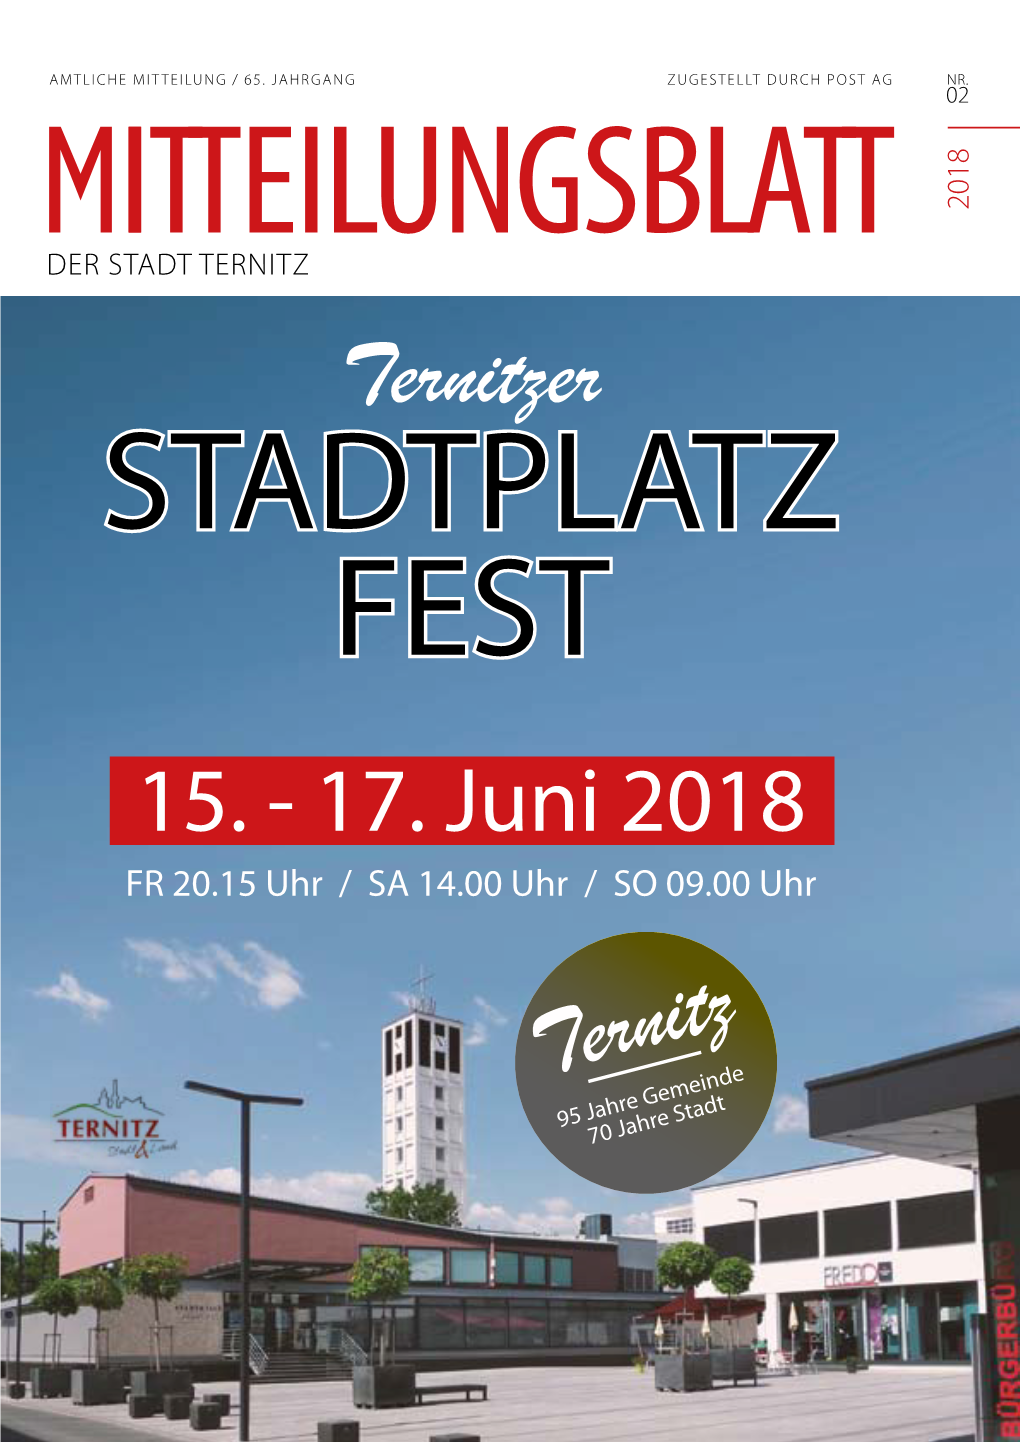 17. Juni 2018 Ternitz